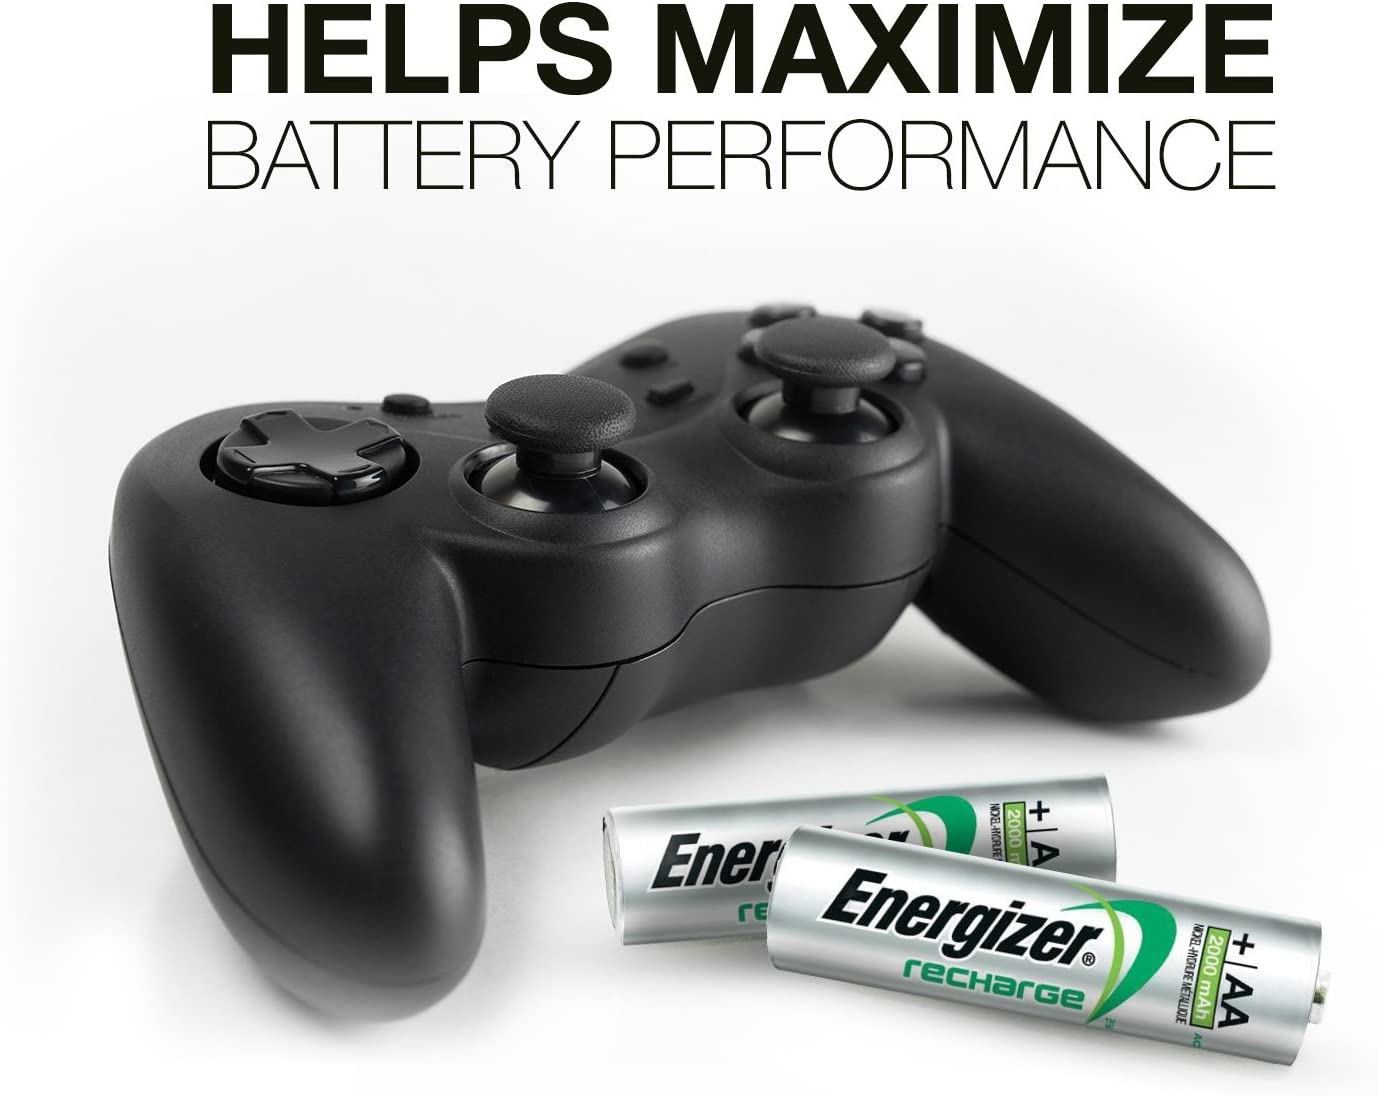 Energize Universal AA & AAA Battery Charger - 8